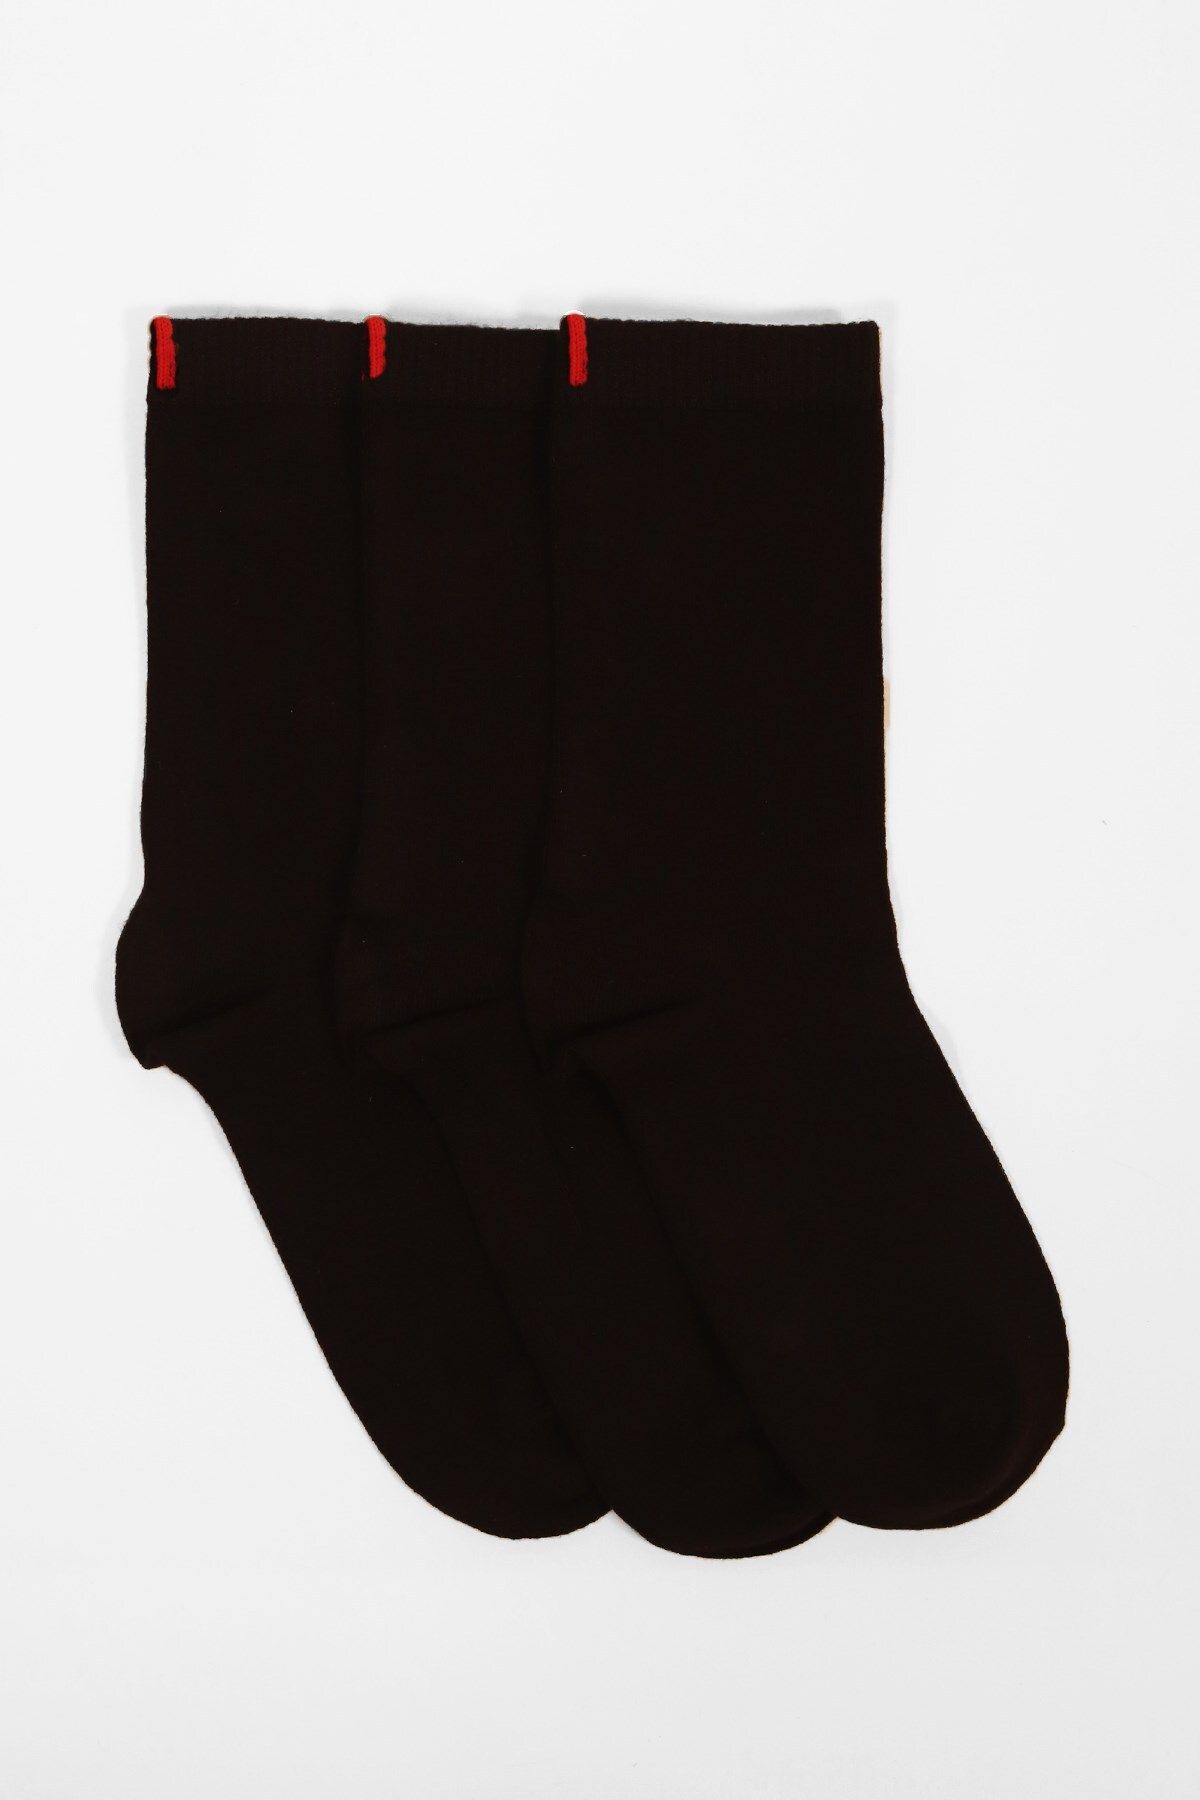 Katia & Bony 3'lü Paket Kadın Harold Bambu Soket Çorap Siyah/siyah/siyah